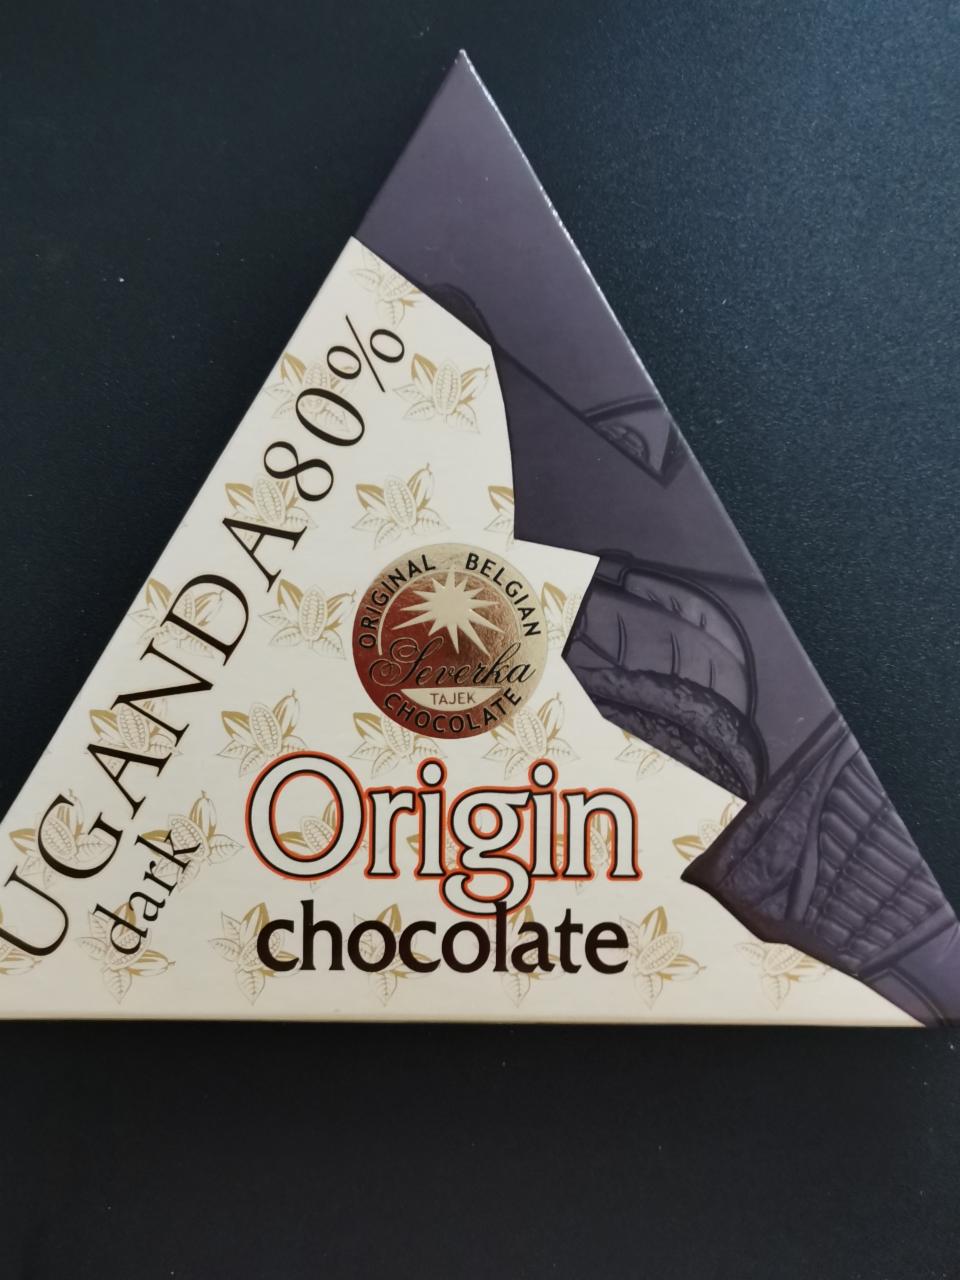 Fotografie - Origin chocolate Uganda 80%